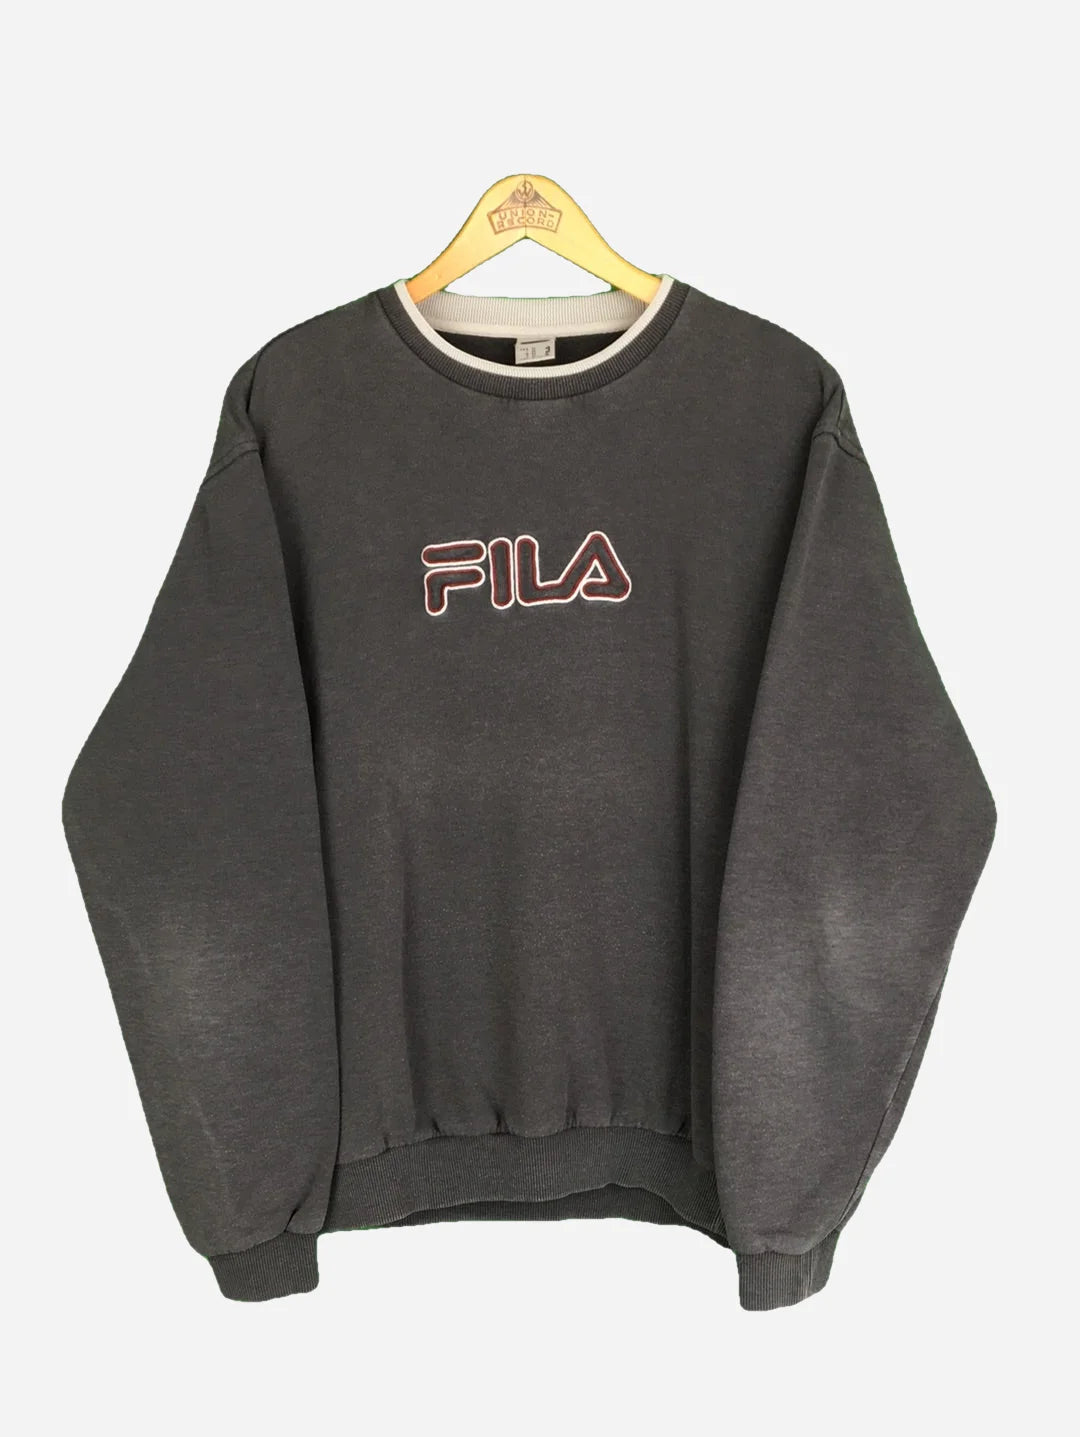 Fila Sweater (M)